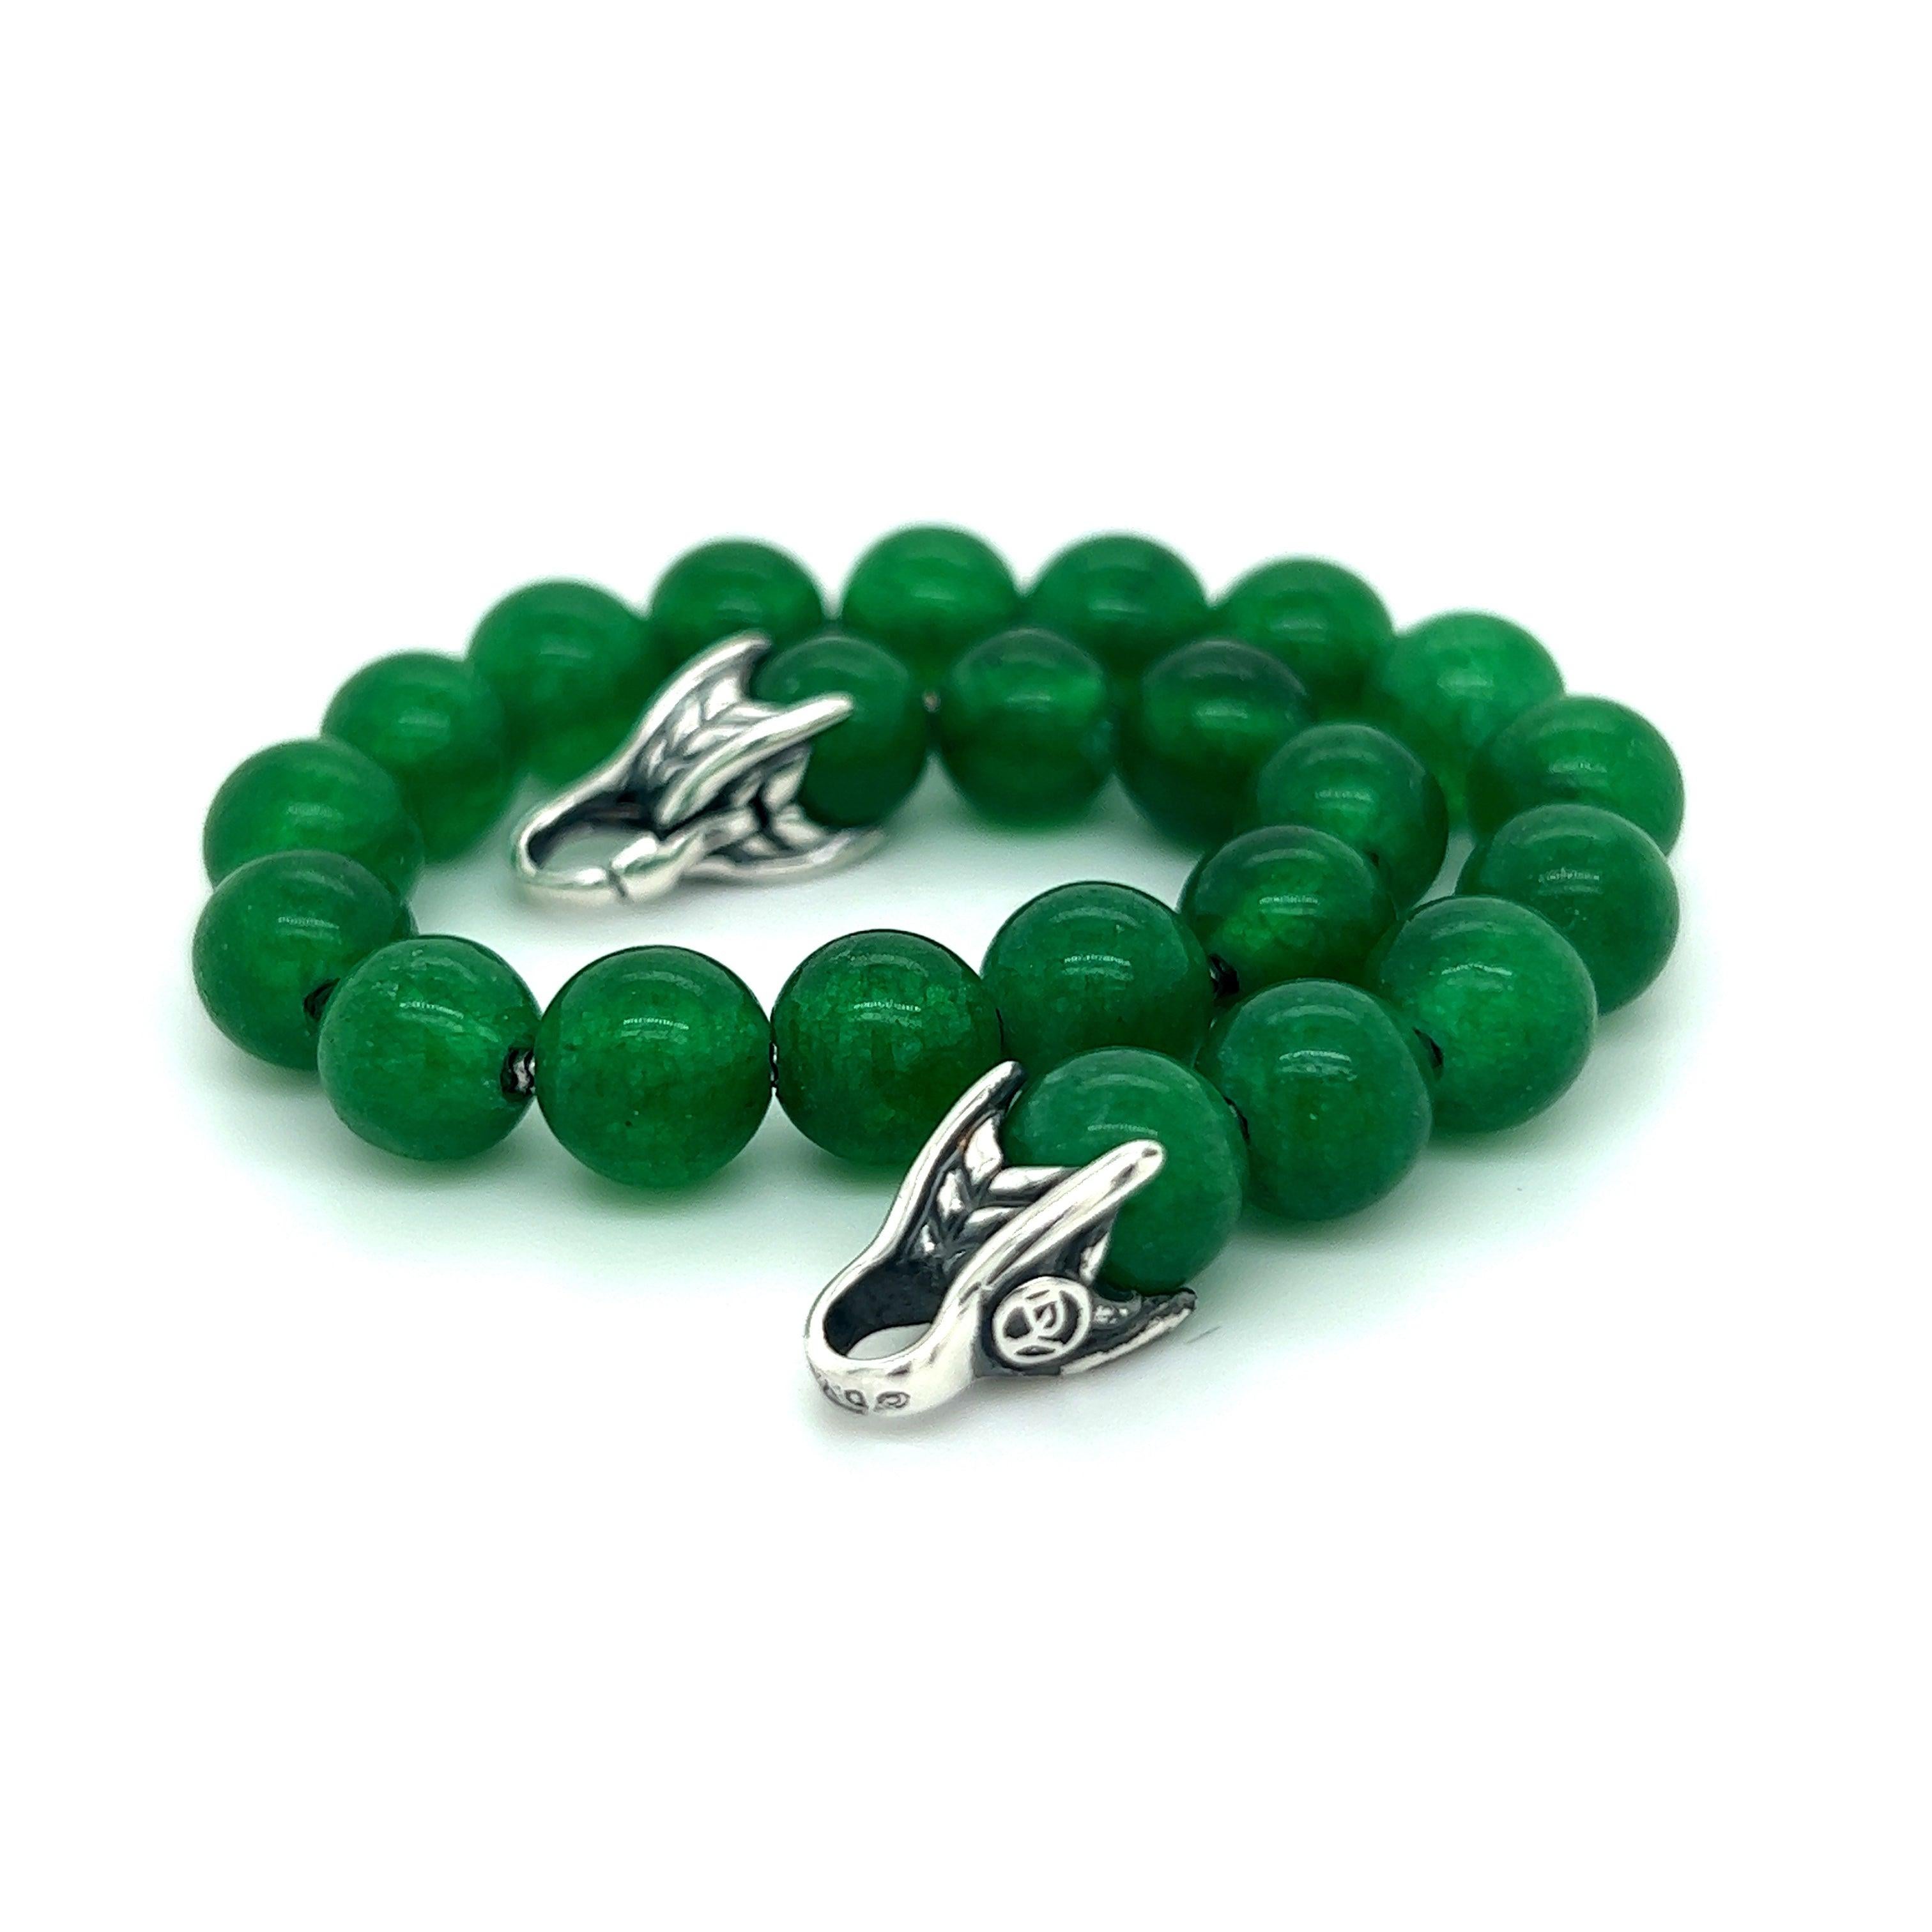 David Yurman Authentic Estate Green Onyx Spiritual  Bead Bracelet 8.5